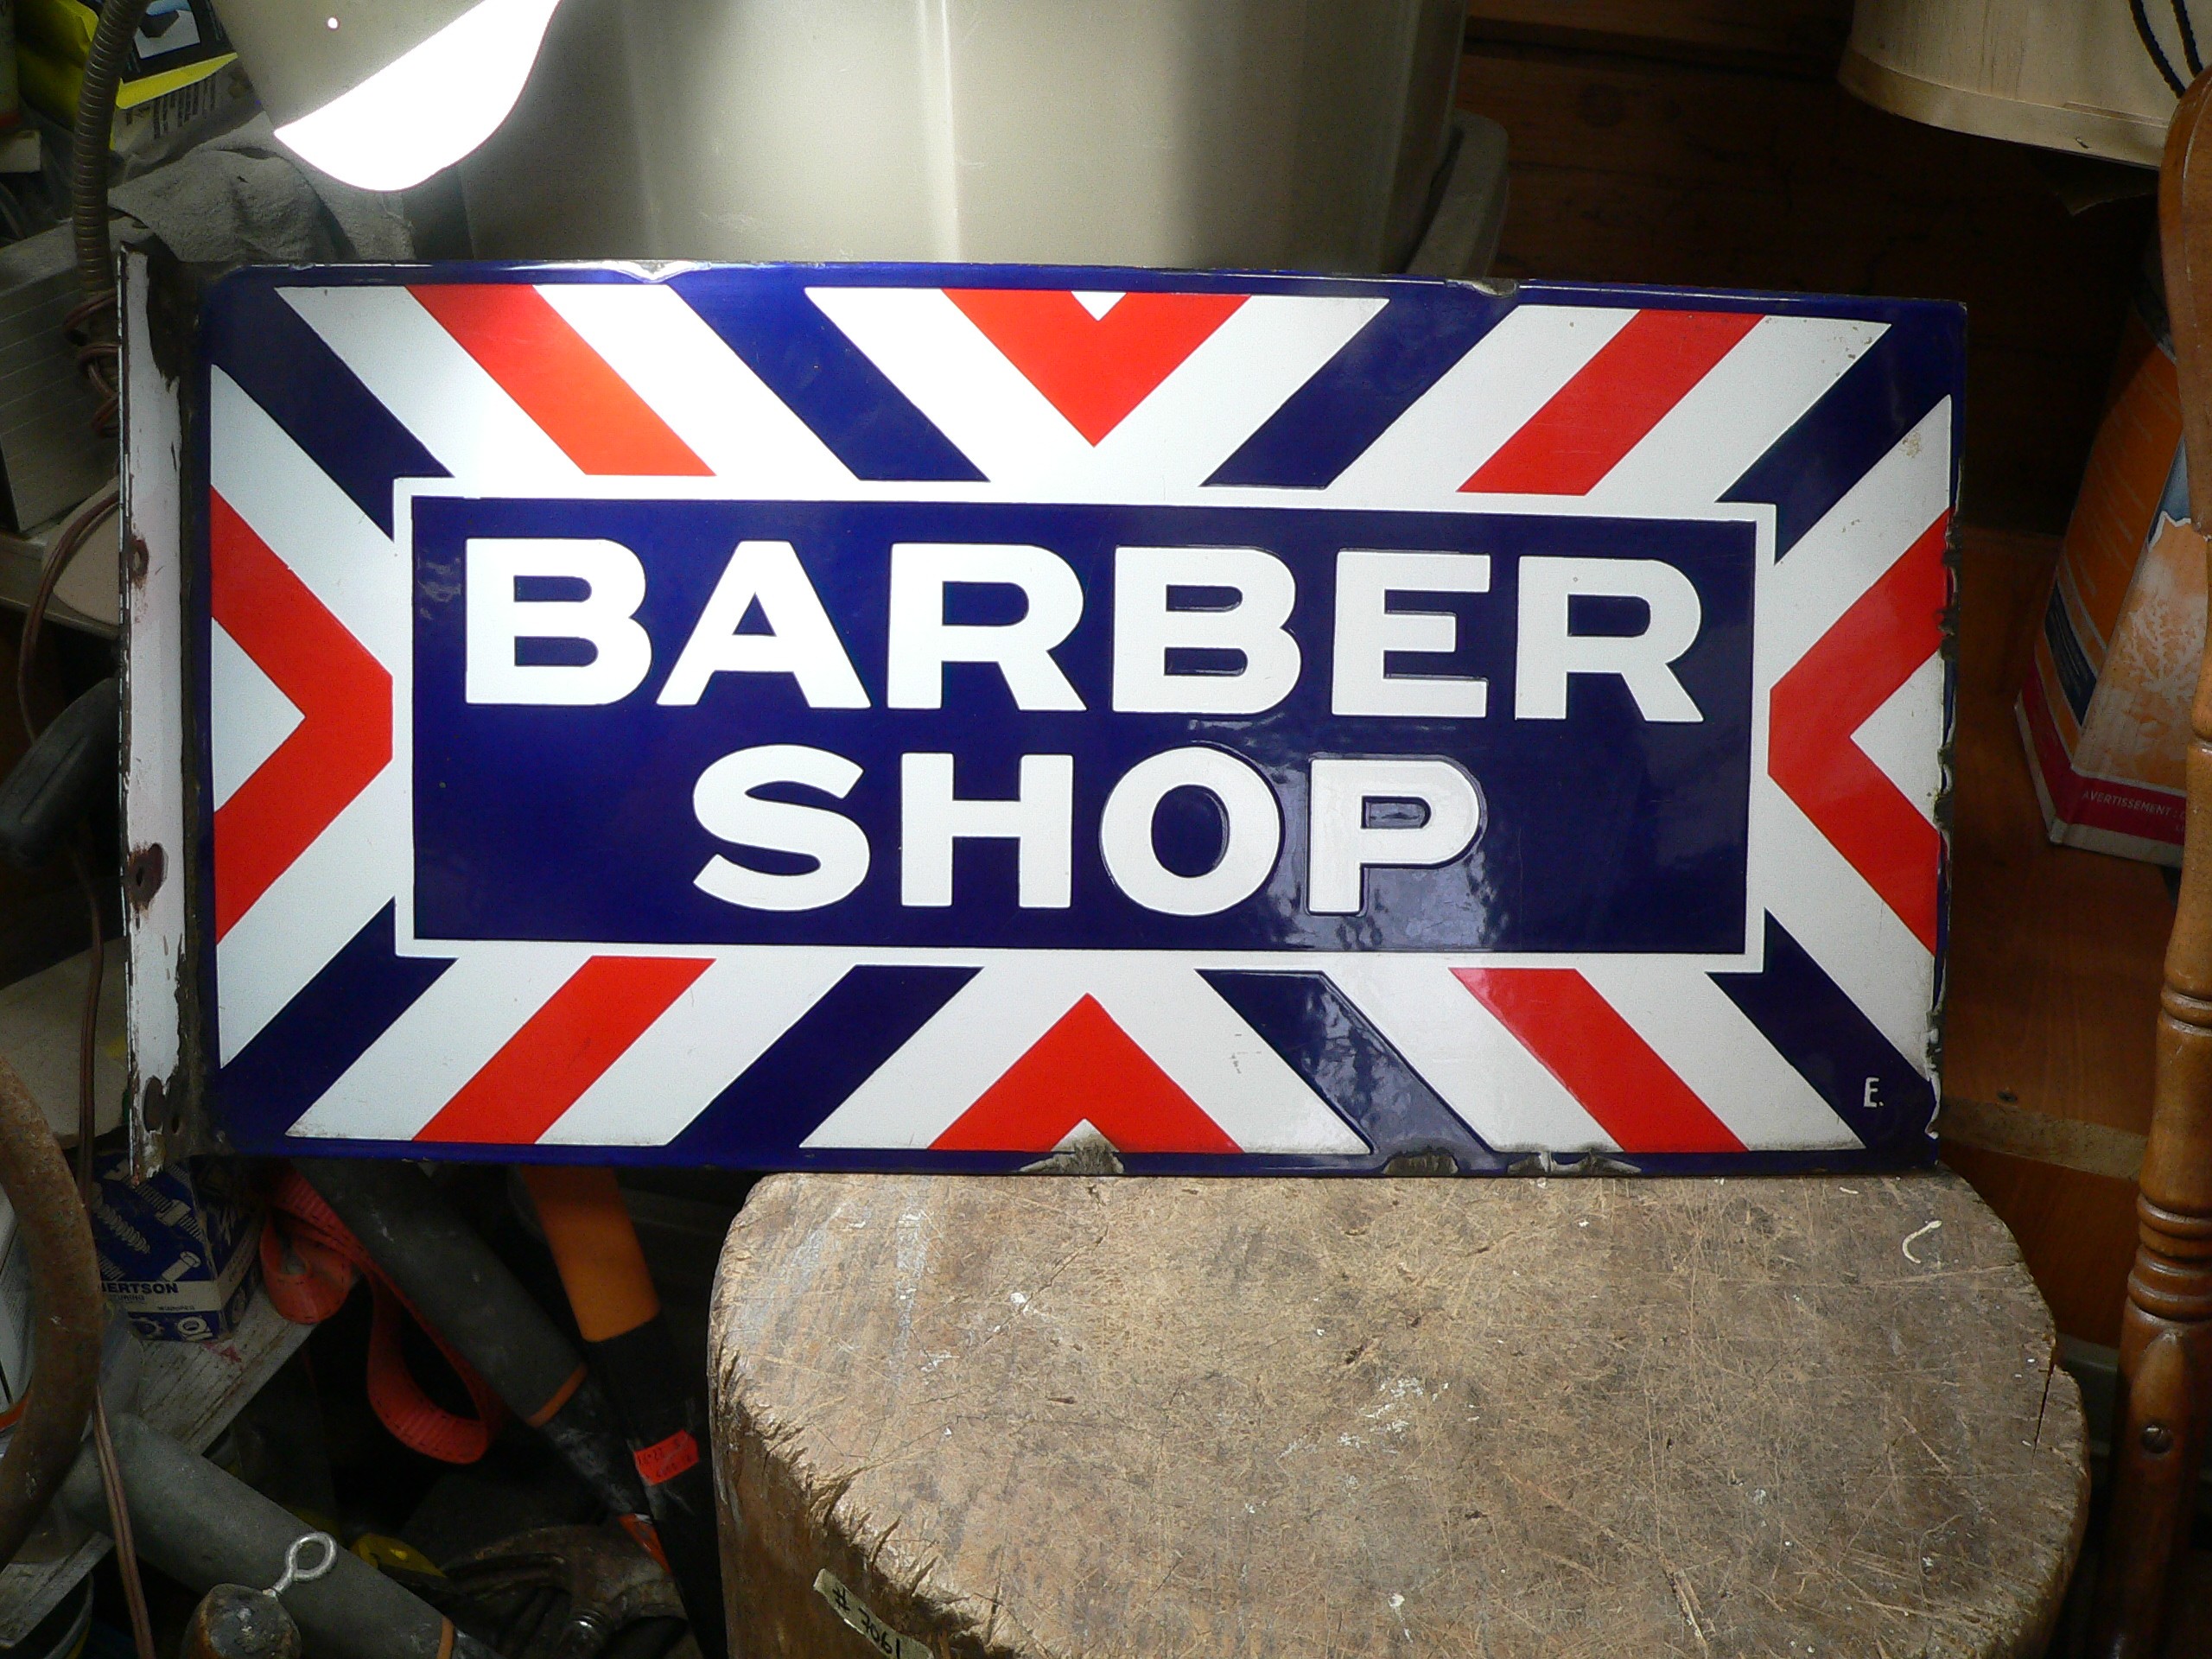 Enseigne barber shop antique # 10973.2